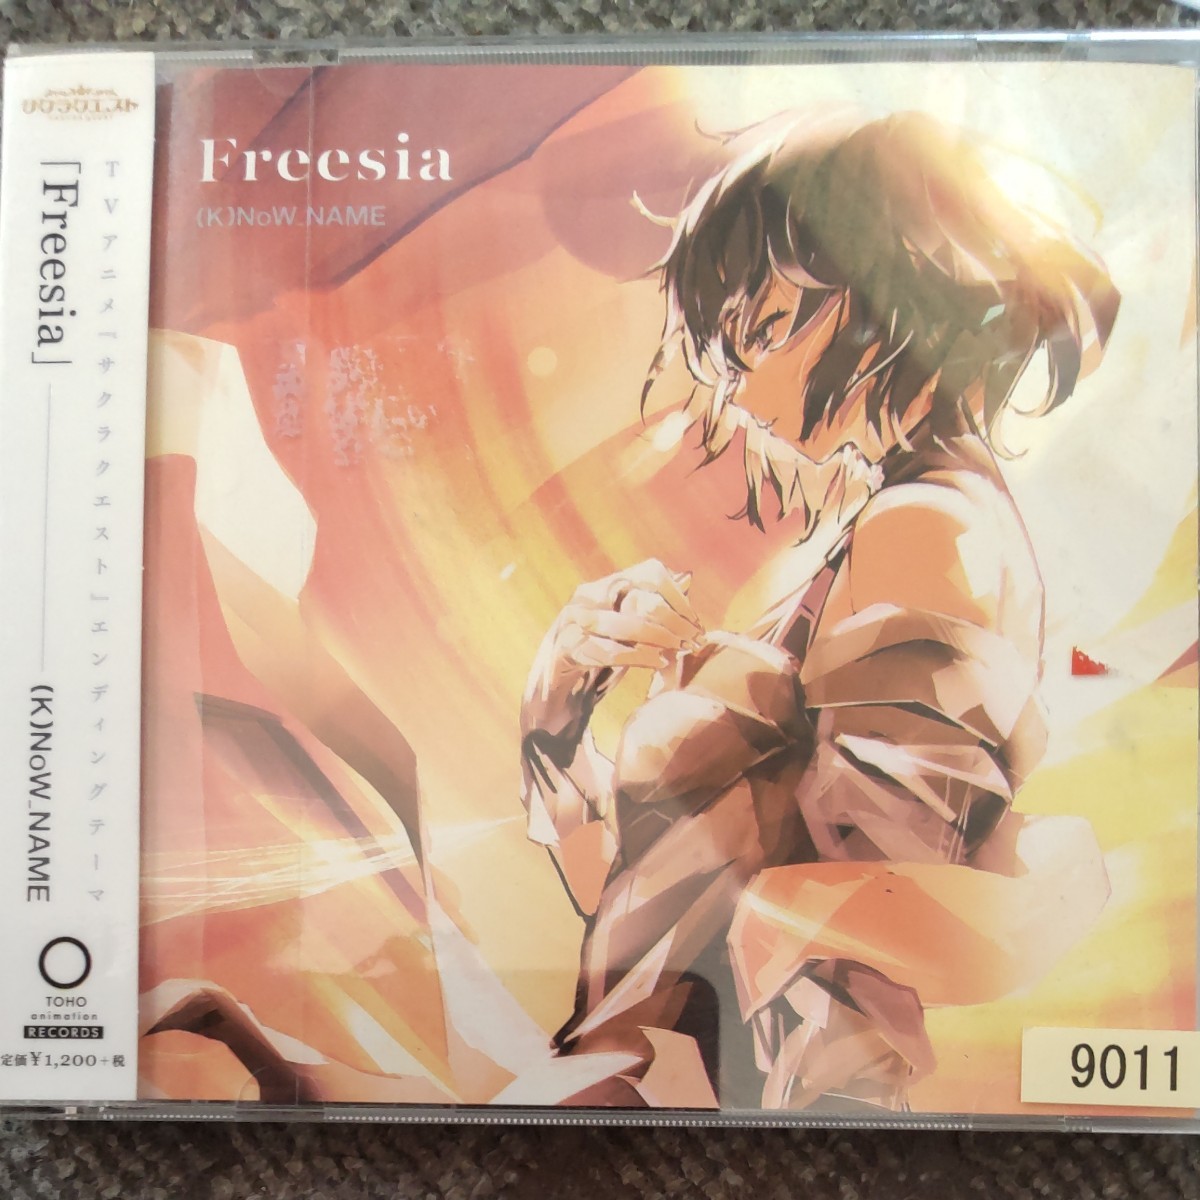 「Freesia」 【通常盤】 (TVアニメ 『サクラクエスト』 エンディングテーマ) CD (K) NoW_NA